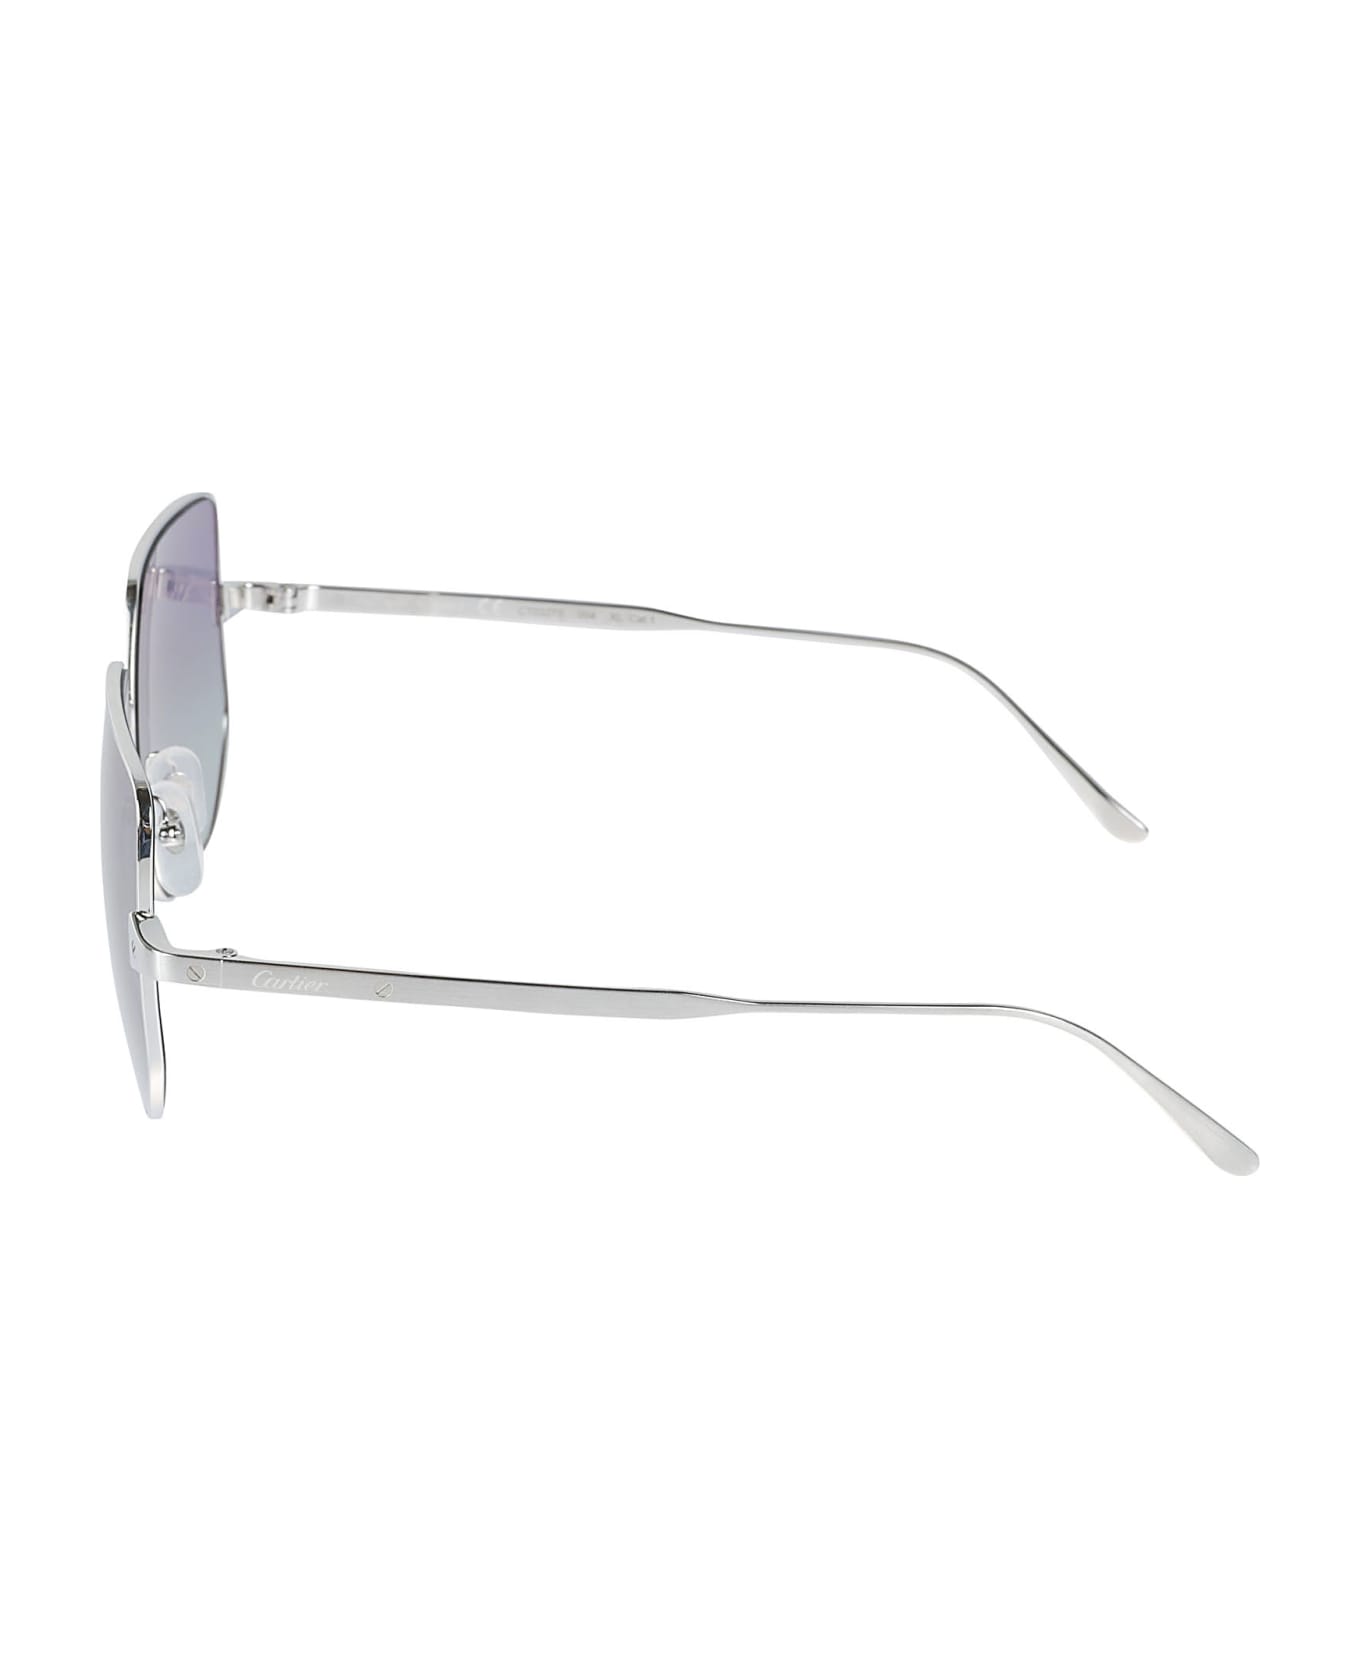 Cartier Eyewear Hexagon Frame Sunglasses Choo - Silver/Violet